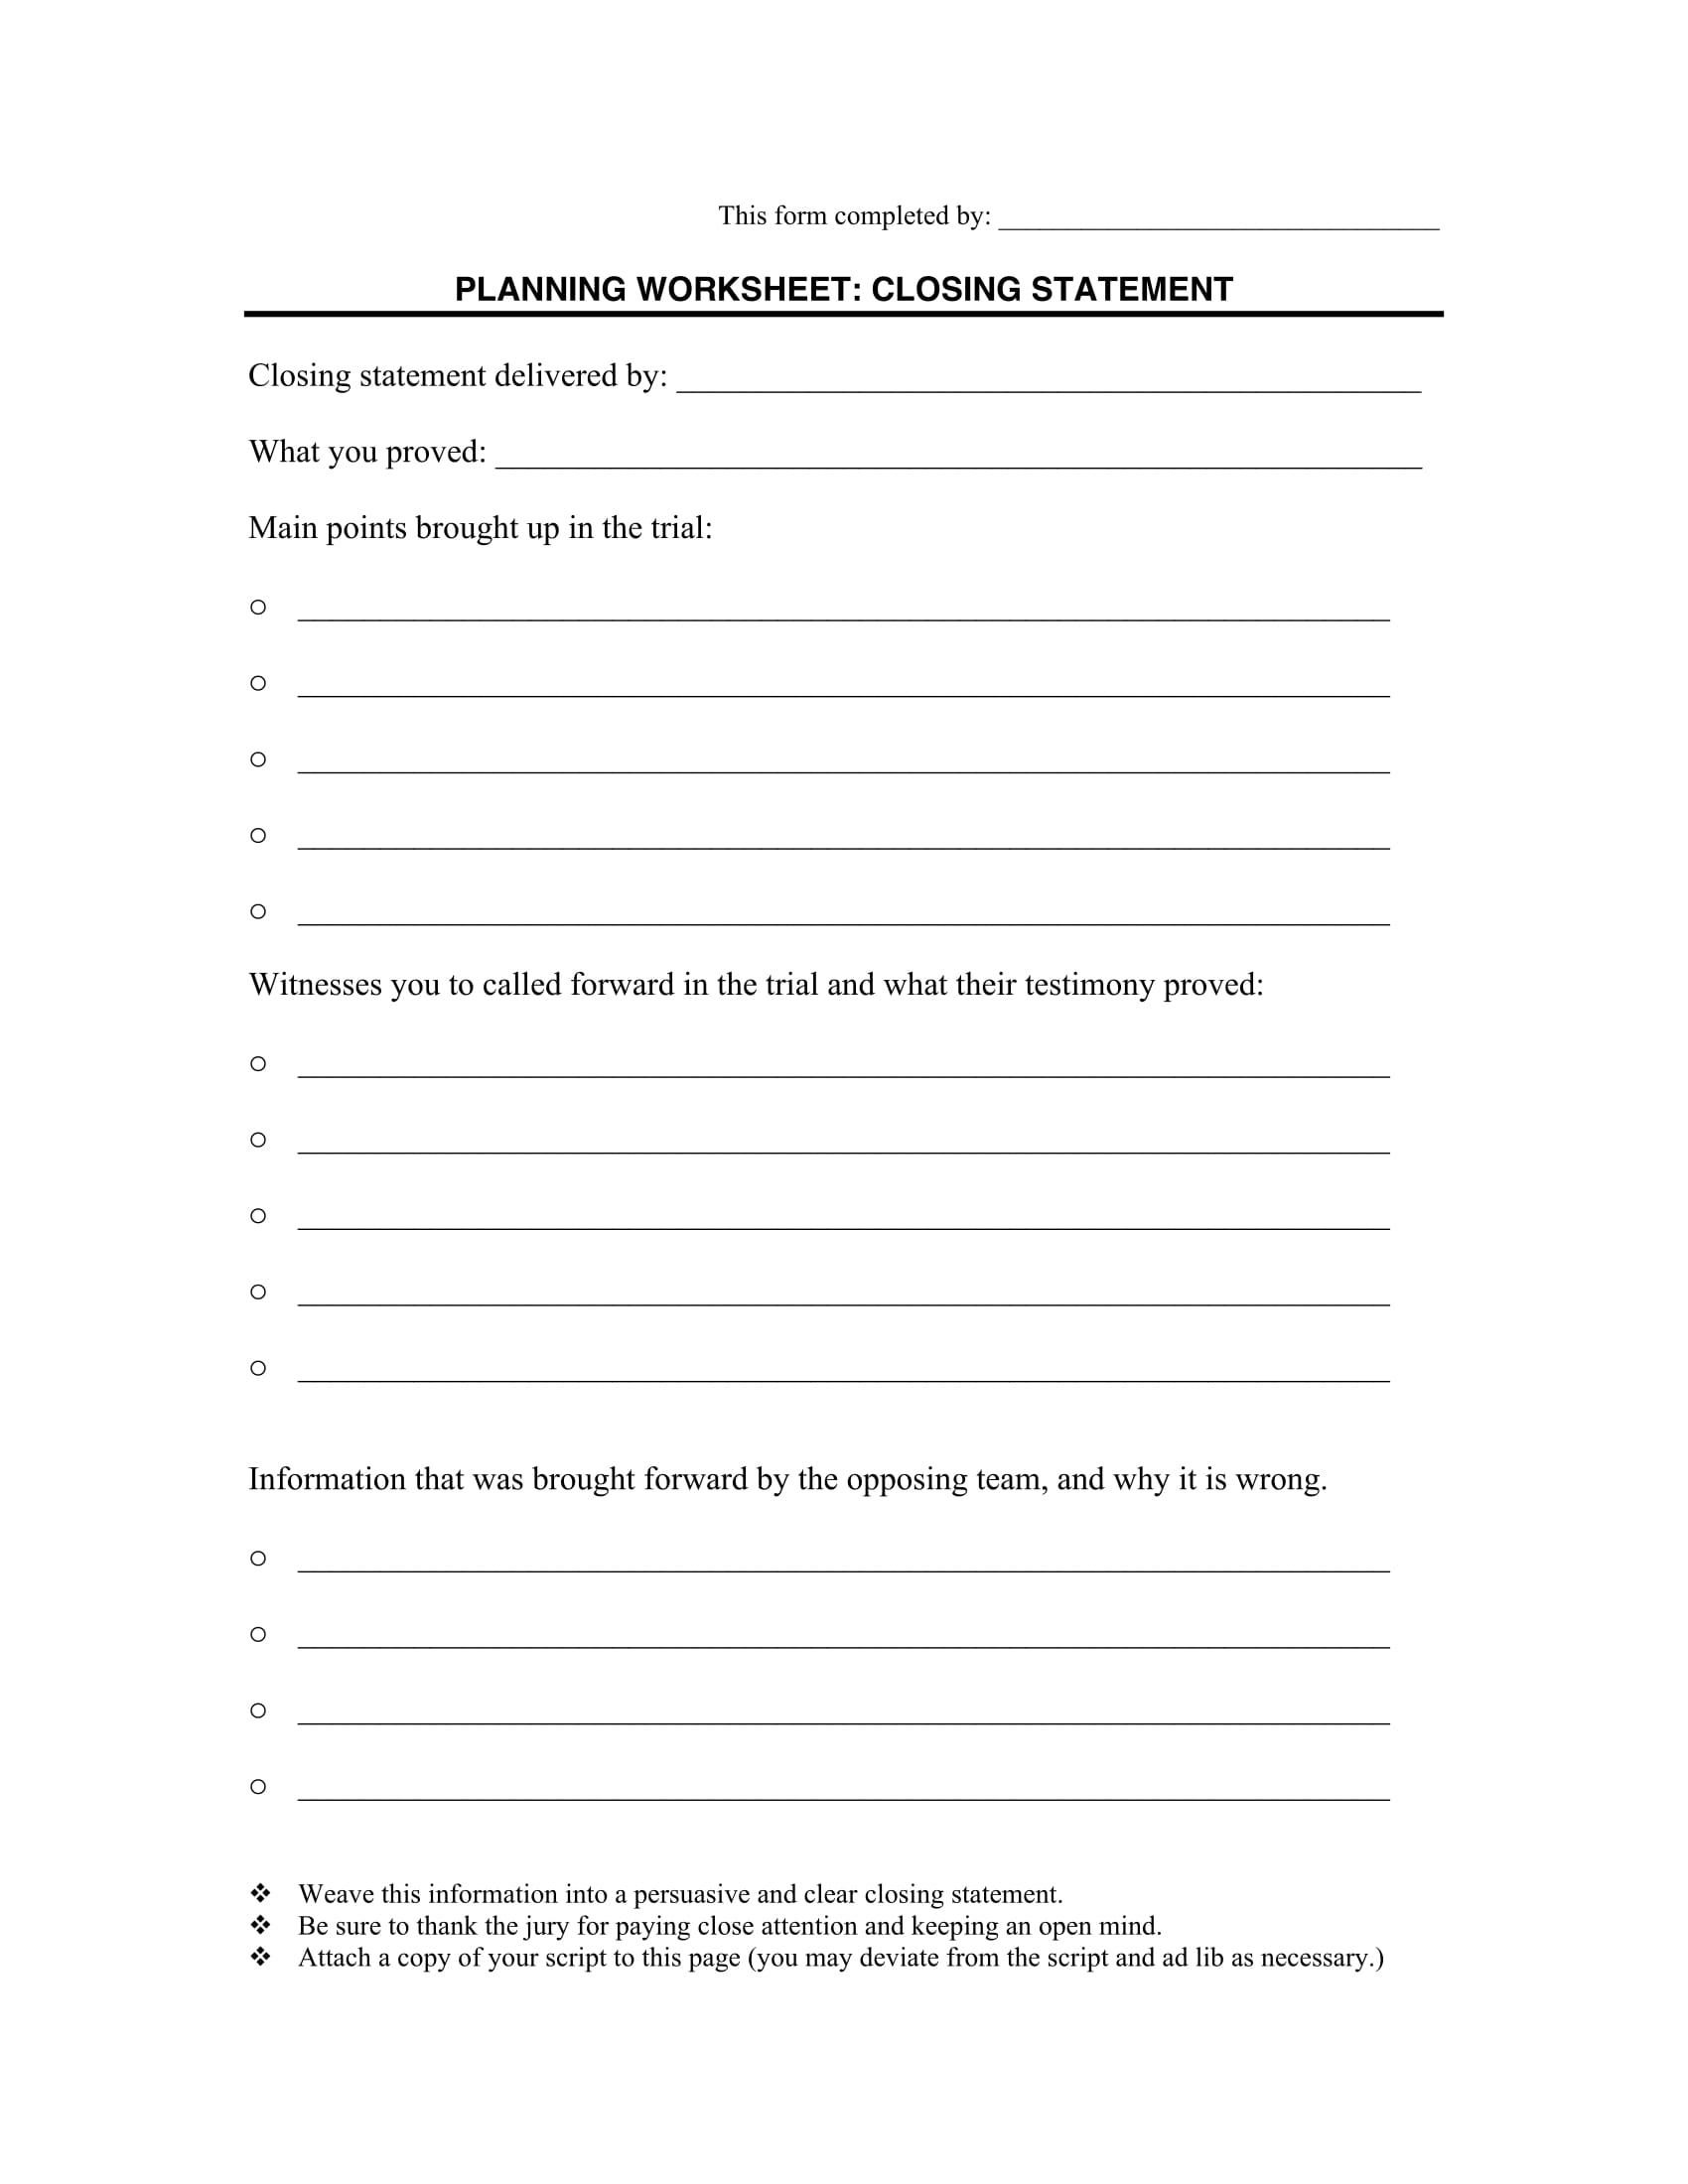 closing statement planning worksheet form 1